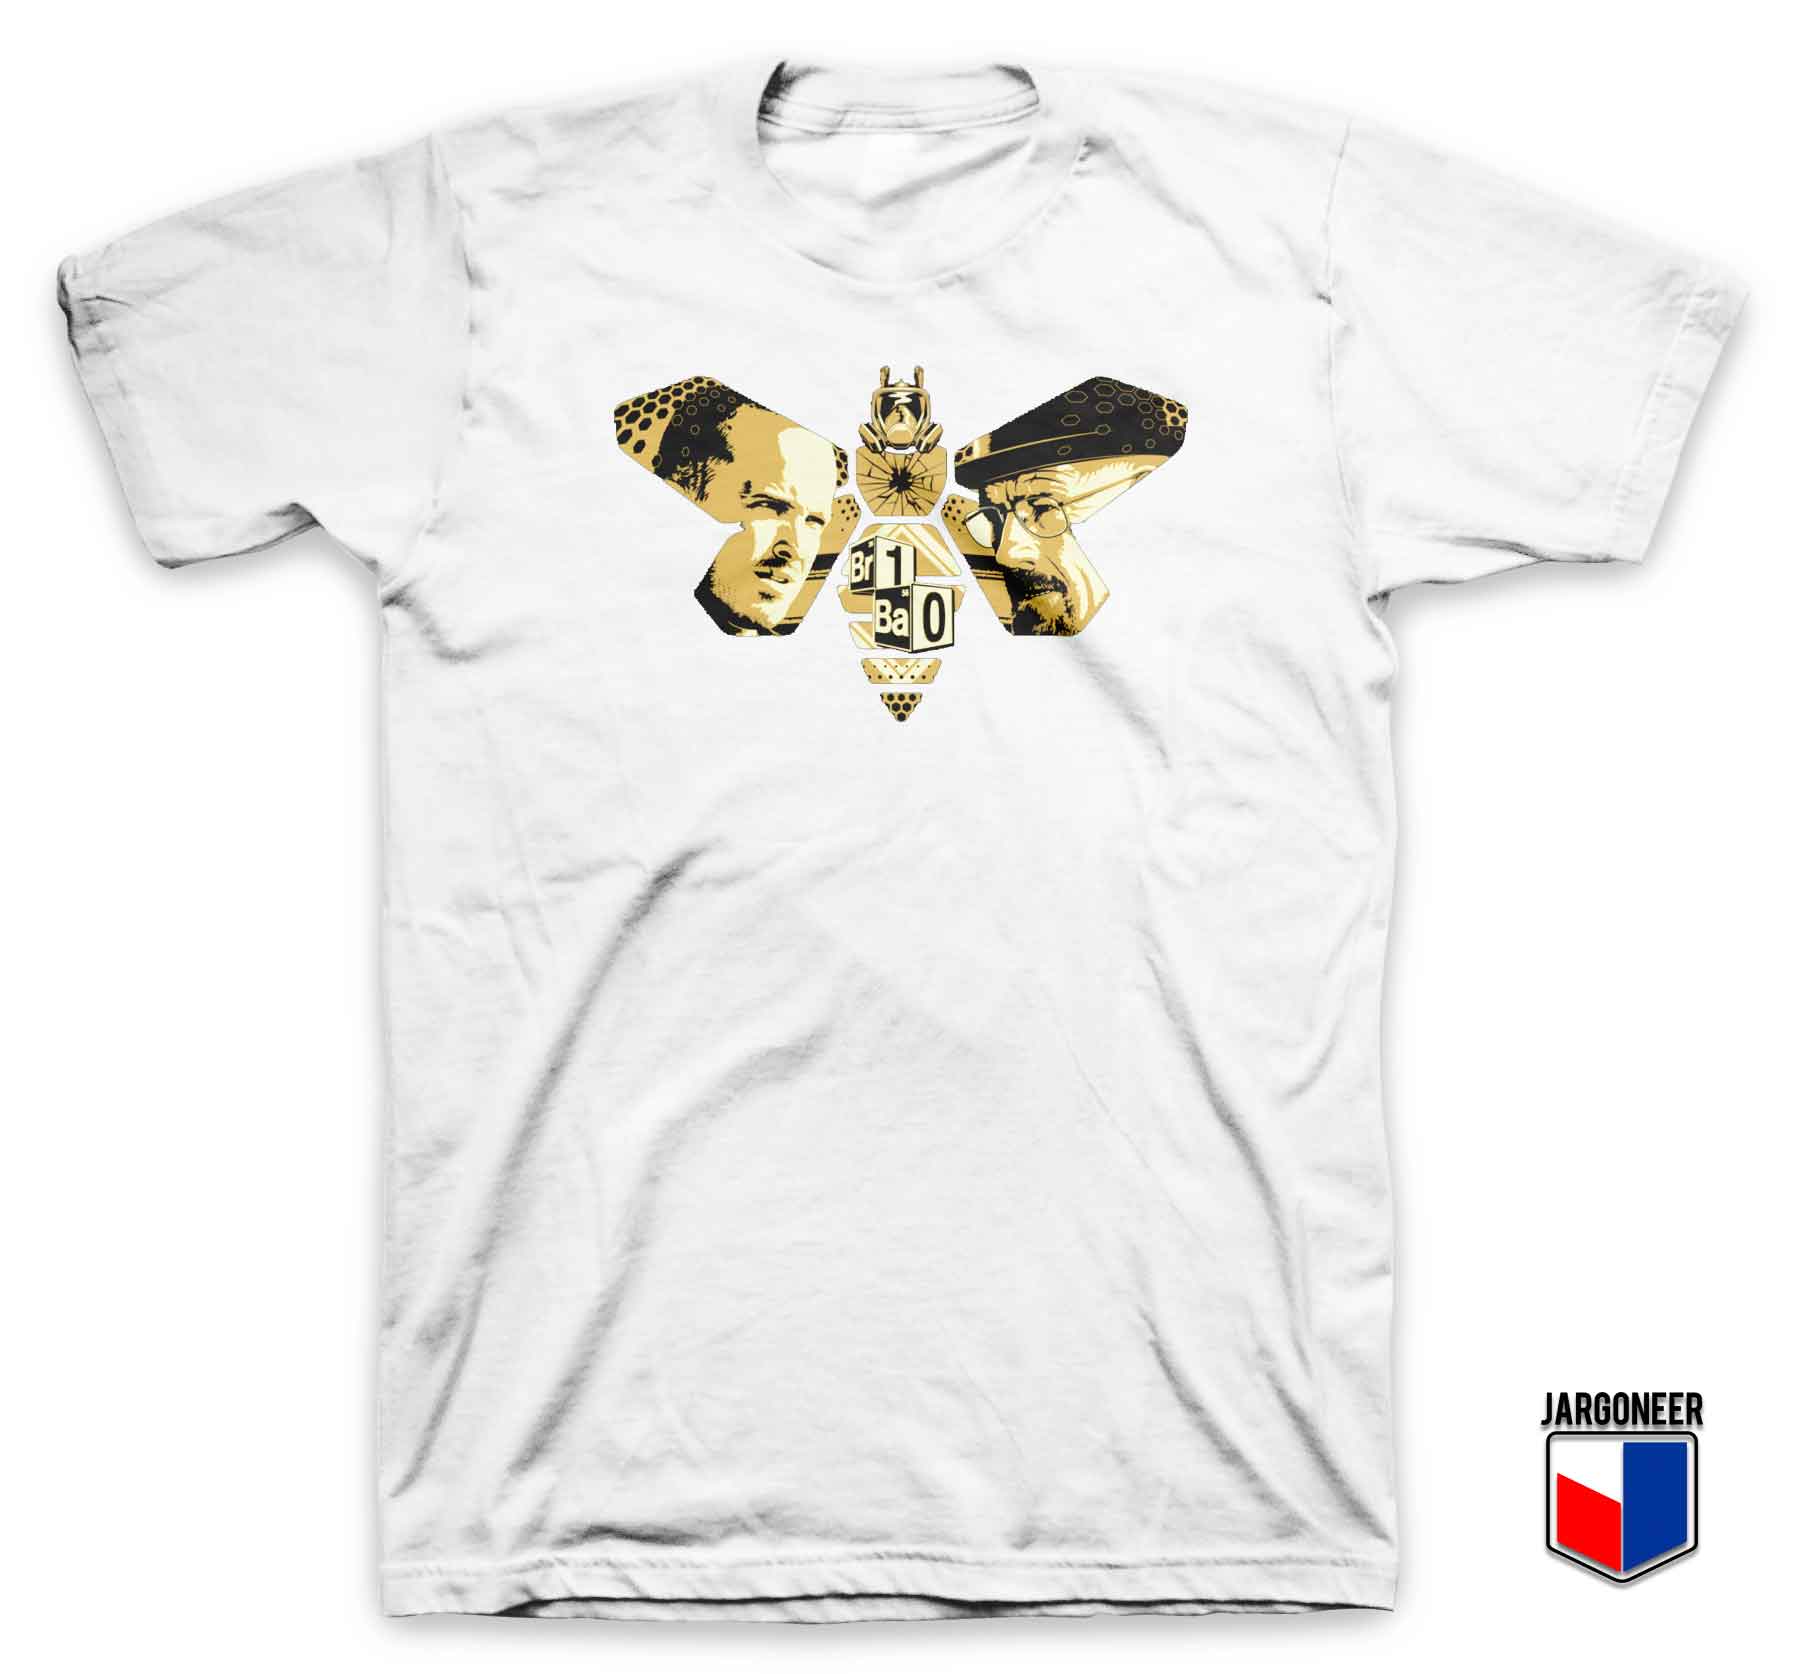 Breaking Bad Moth T Shirt - Shop Unique Graphic Cool Shirt Designs